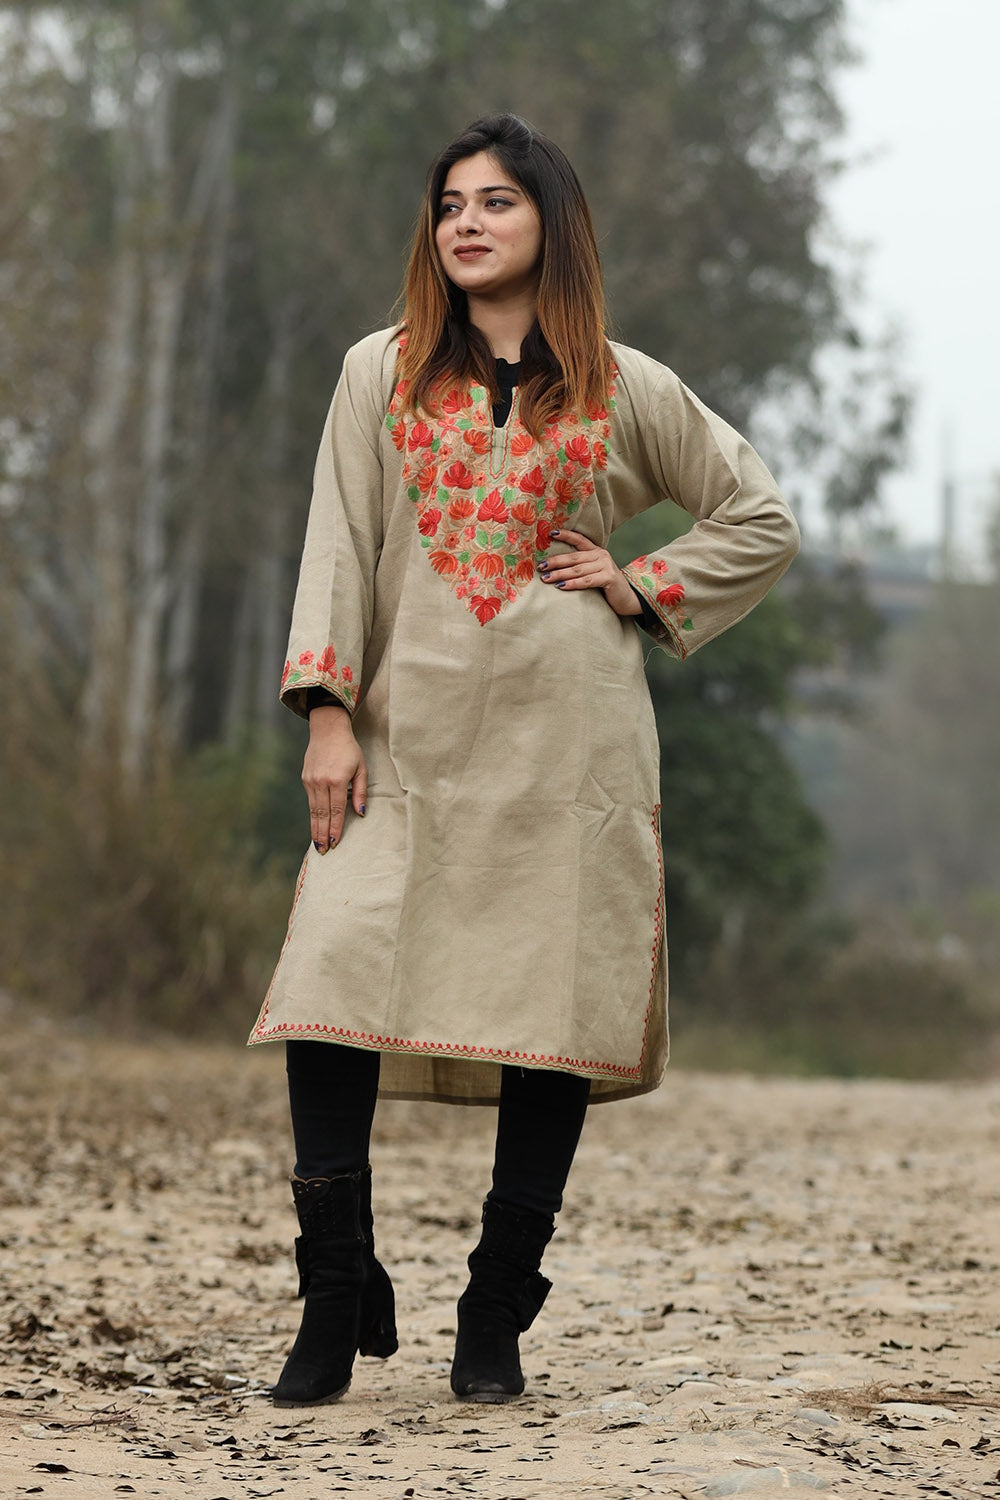 Buy Meesan Women's Beautiful Cotton Long Kurti | Designer Women's Kurta |  Casual & Office Wear | Stylish Collection for Girls & Womens (Grey-XL) at  Amazon.in